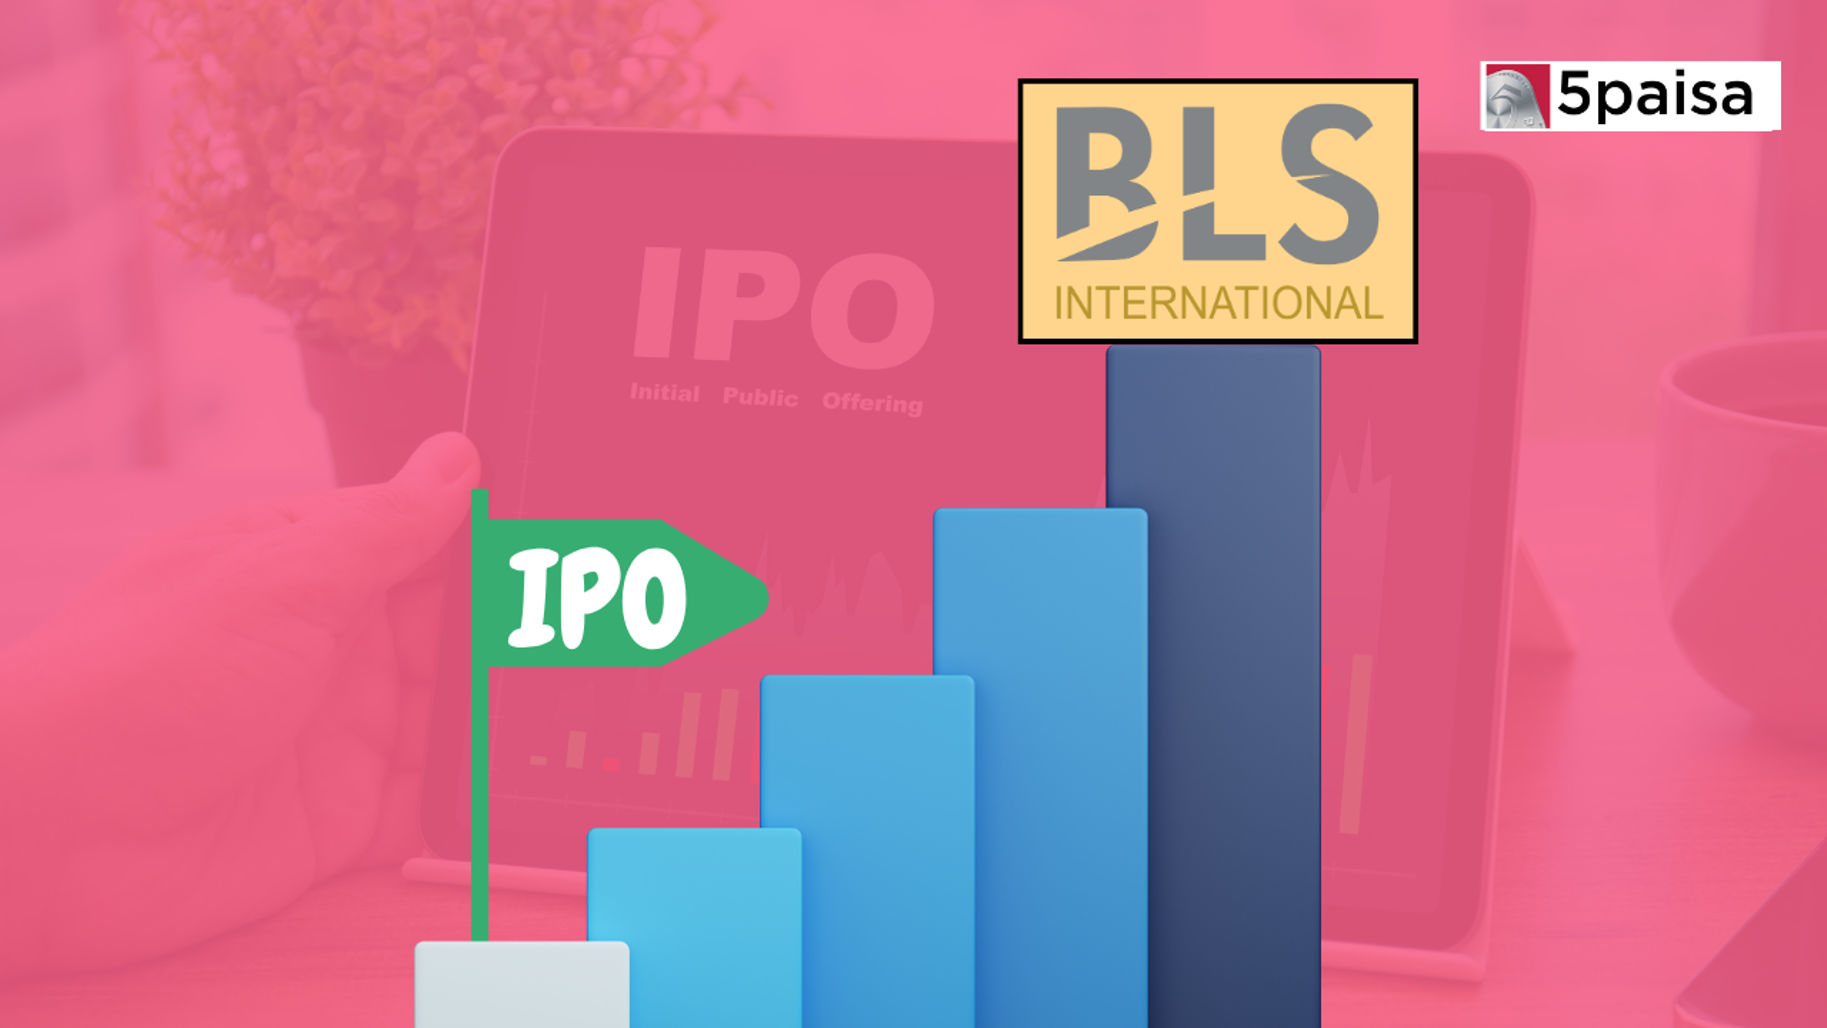 BLS E-Services IPO Financial Analysis